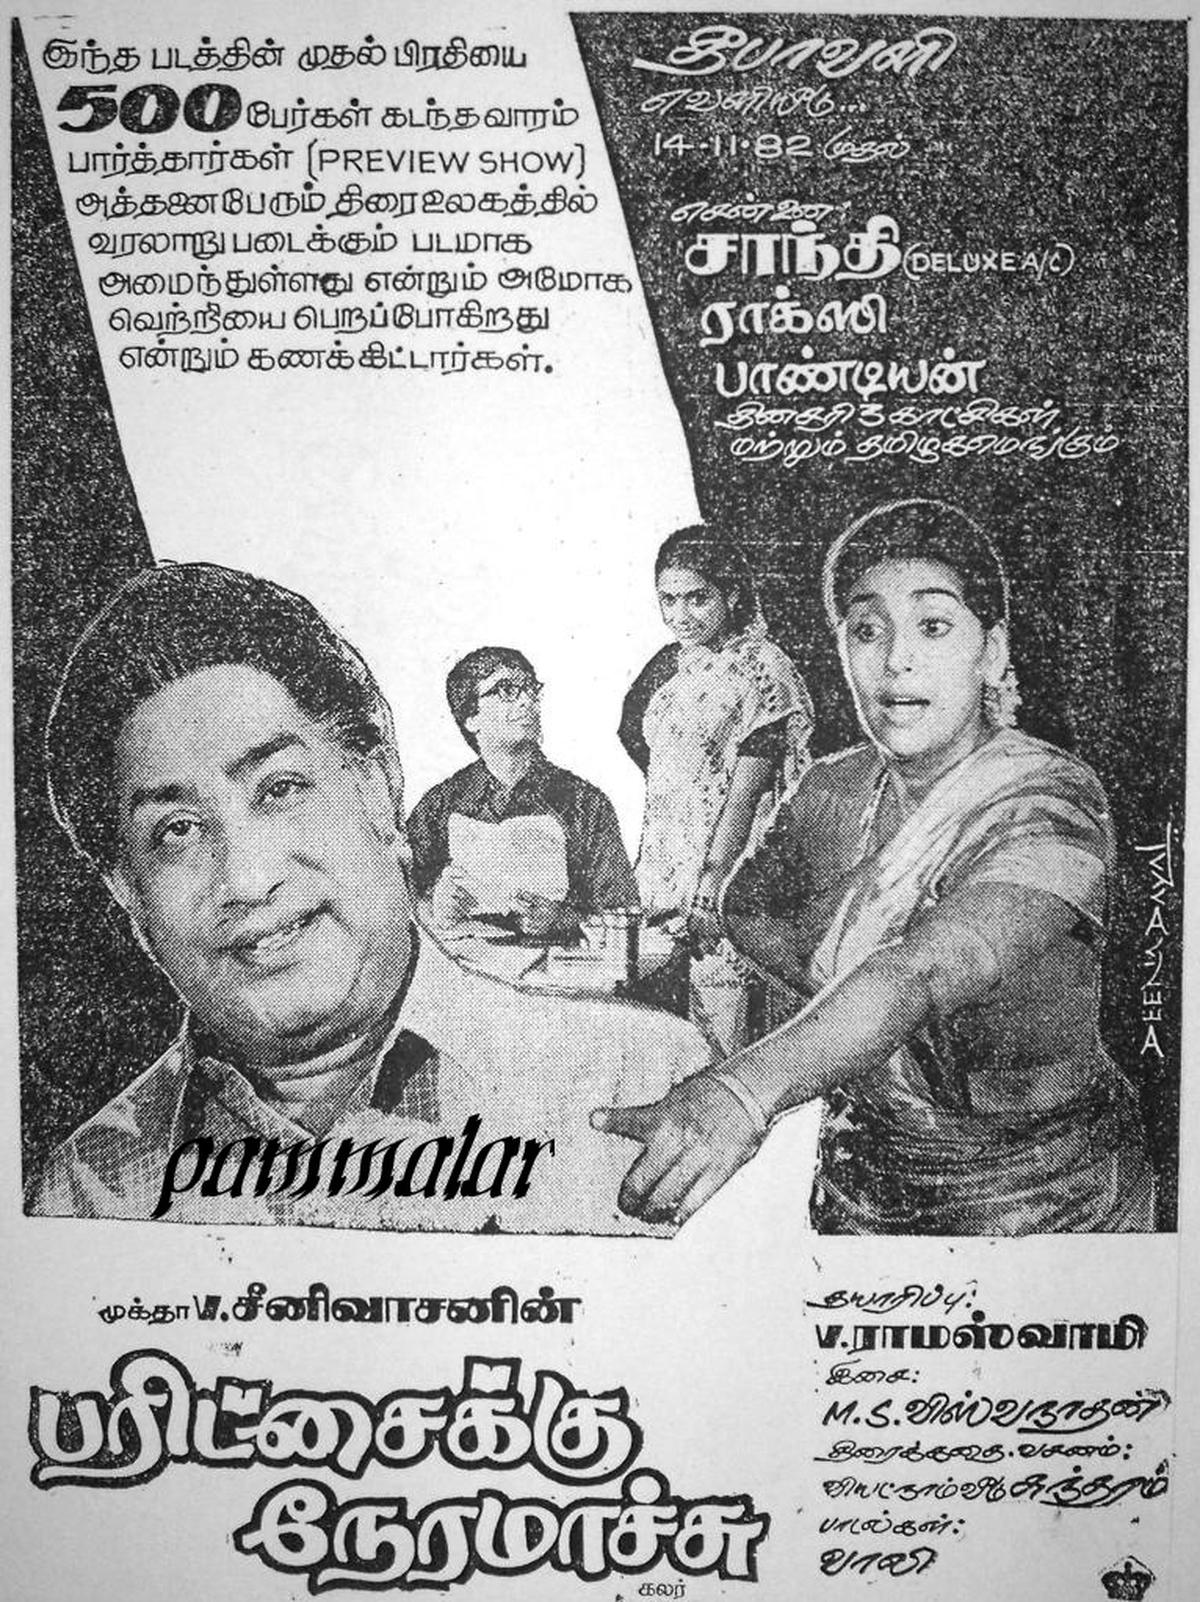 Pareetchaikku Neramachu film advertisement.